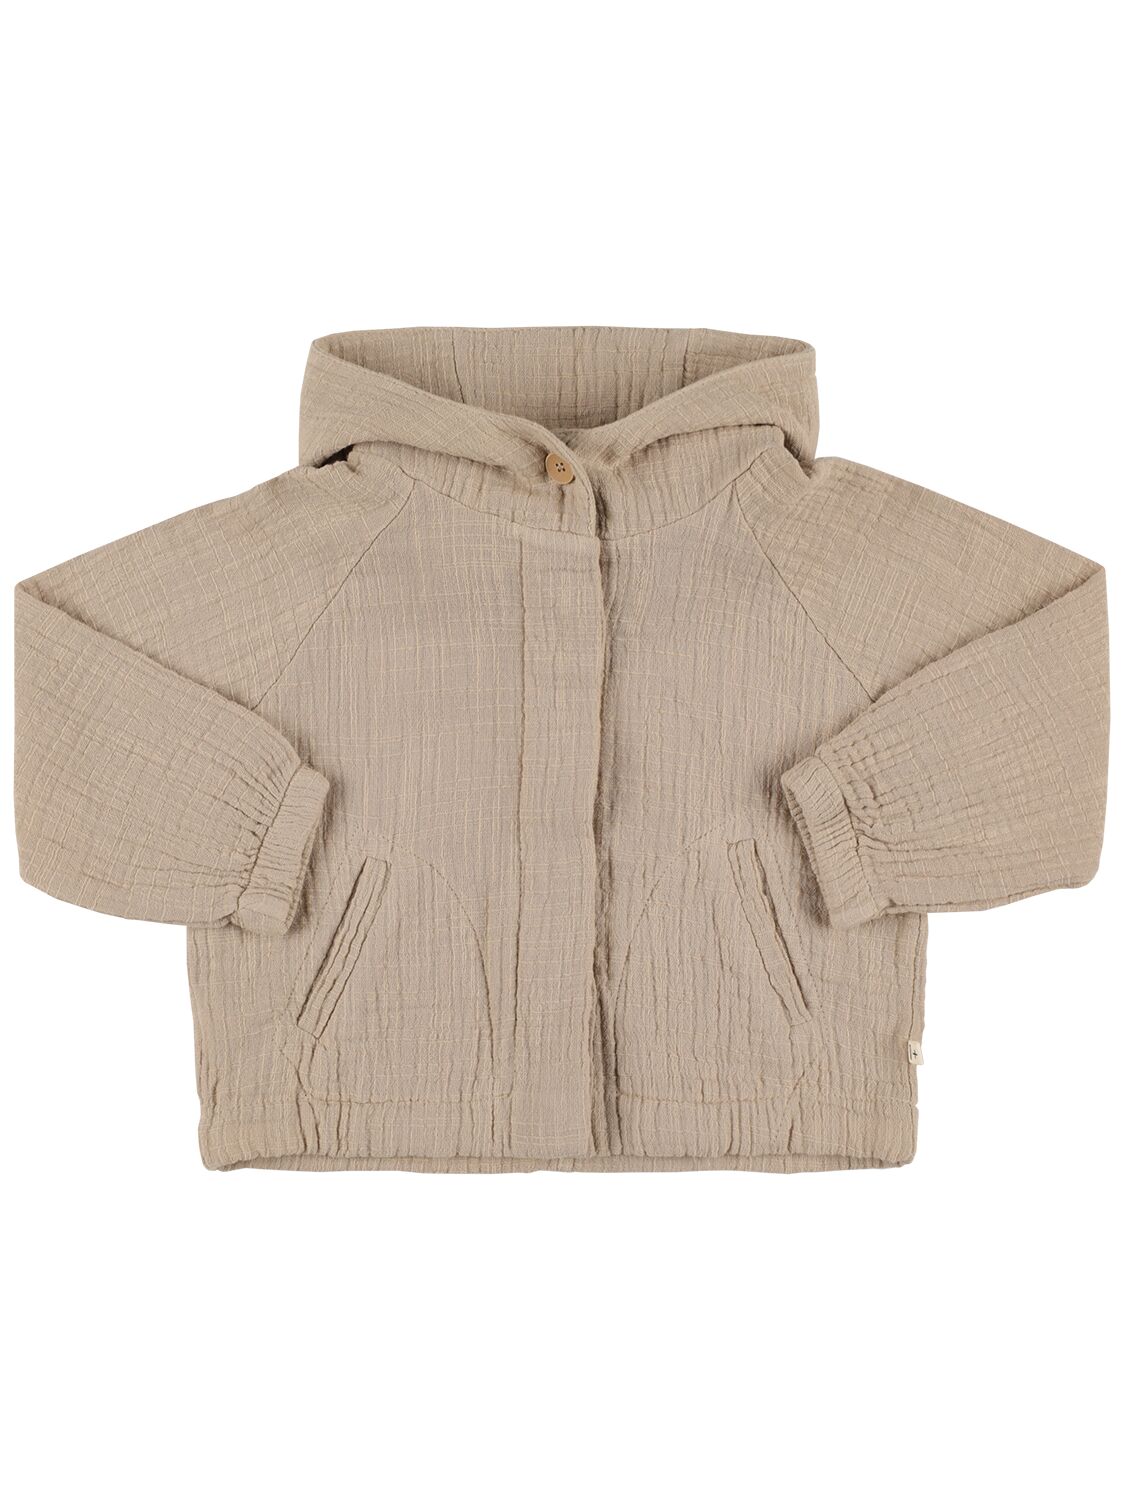 Image of Hooded Cotton Jacket